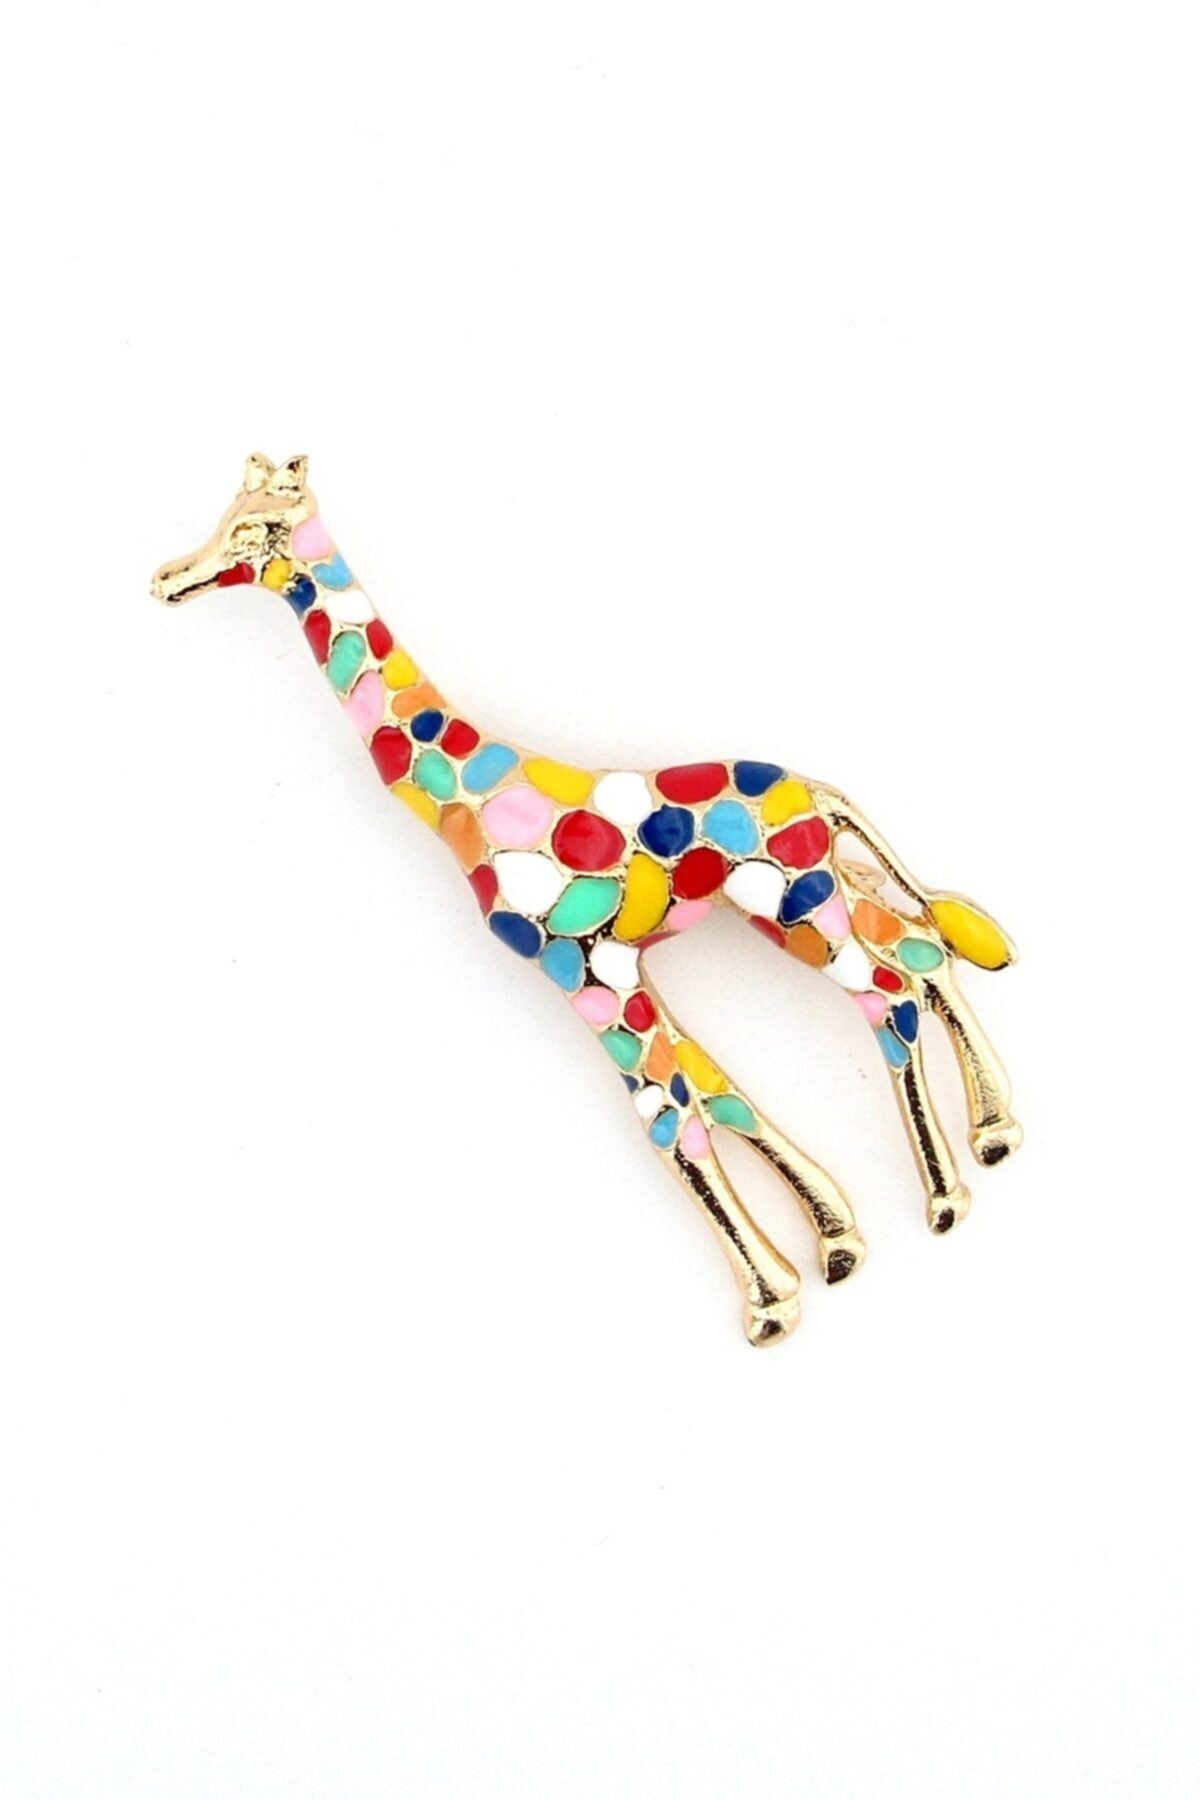 Solfera Renkli Benekler Zürafa Büyük Boy Broş Pin Rozet Iğne Rz019